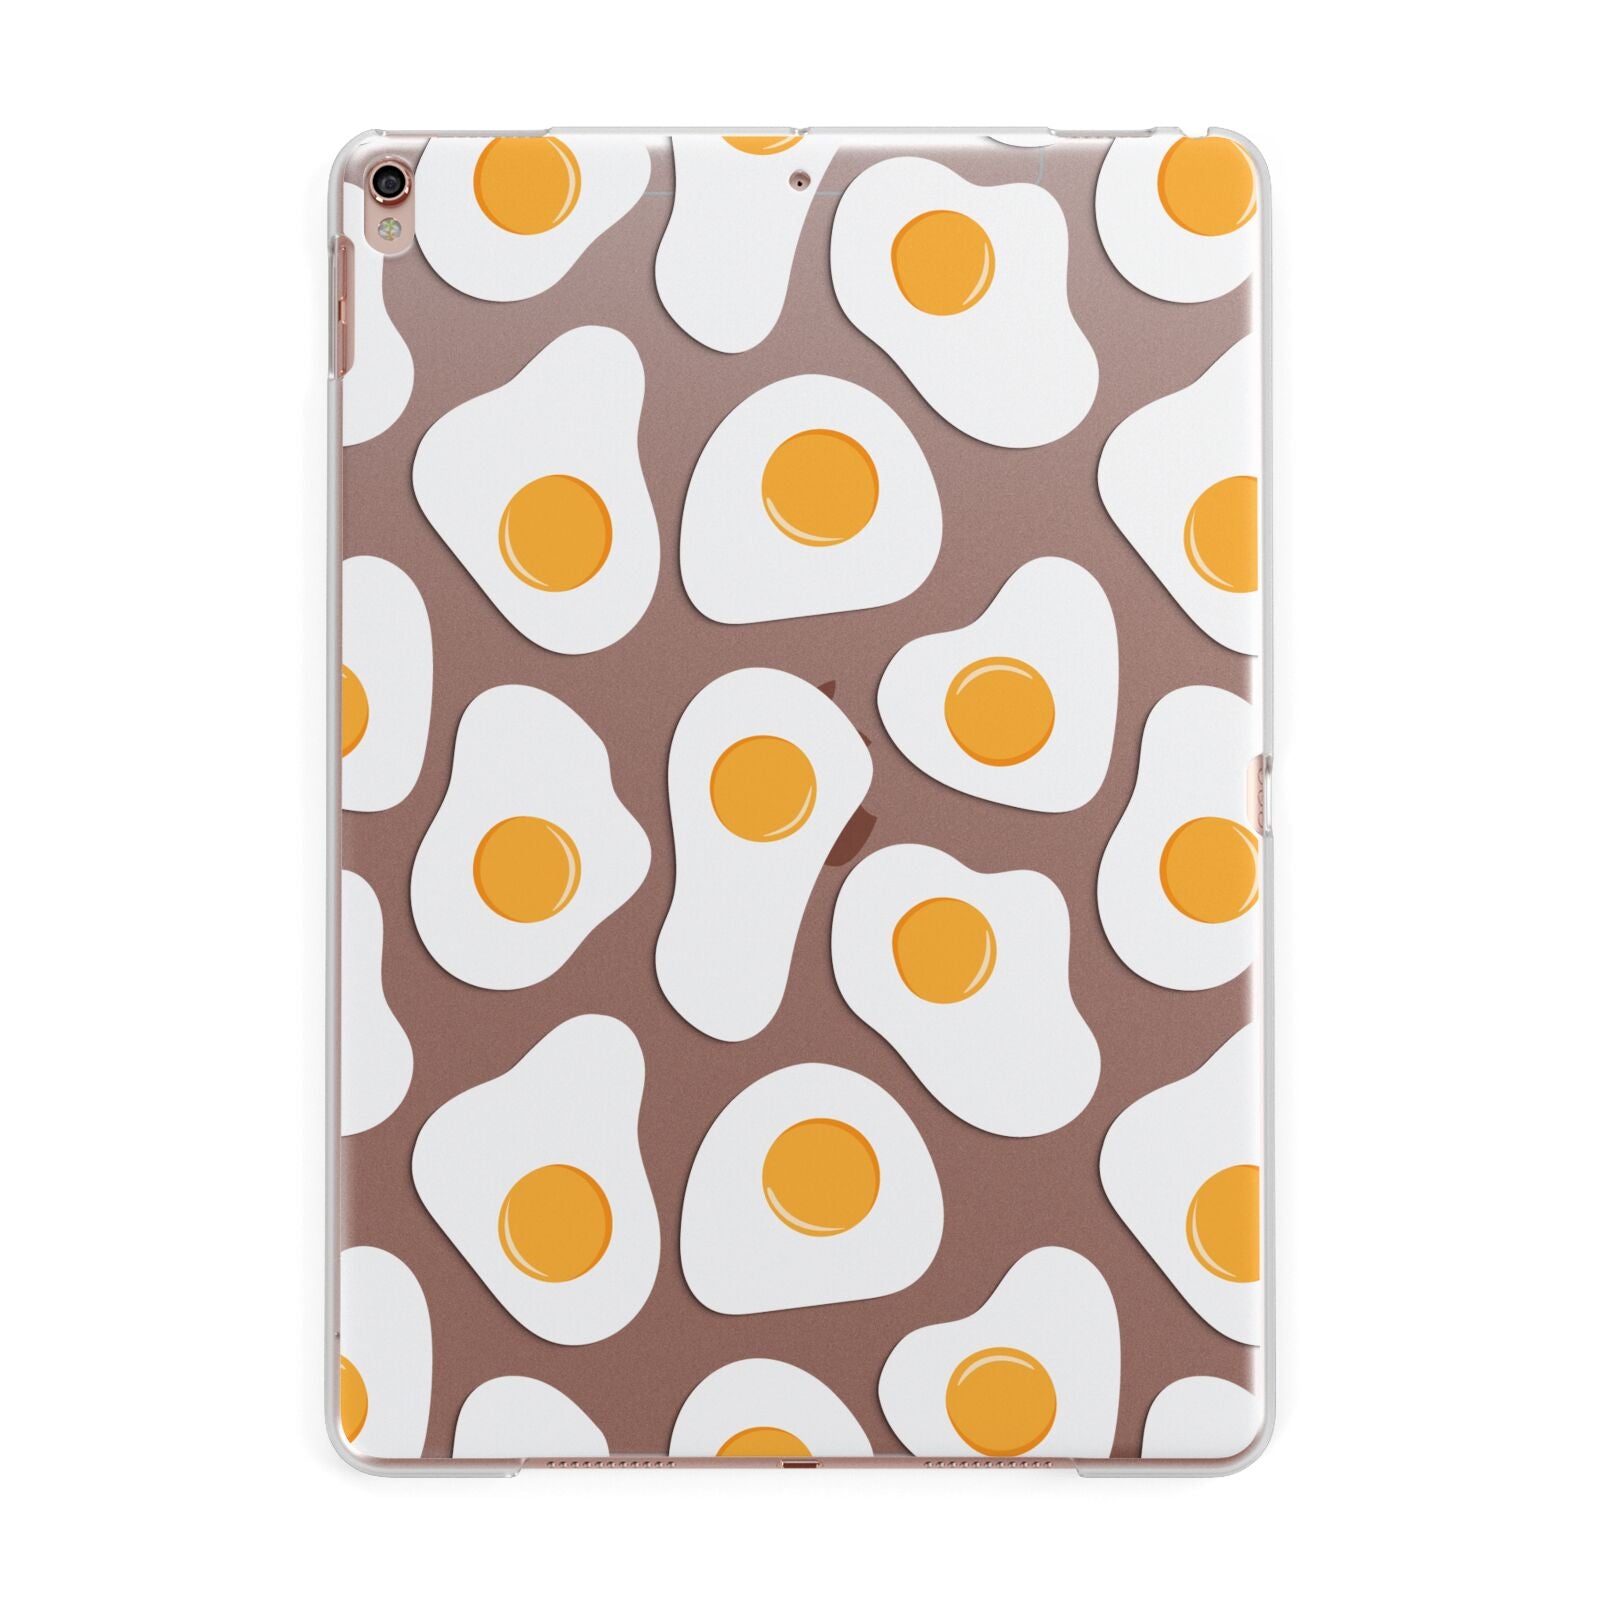 Fried Egg Apple iPad Rose Gold Case